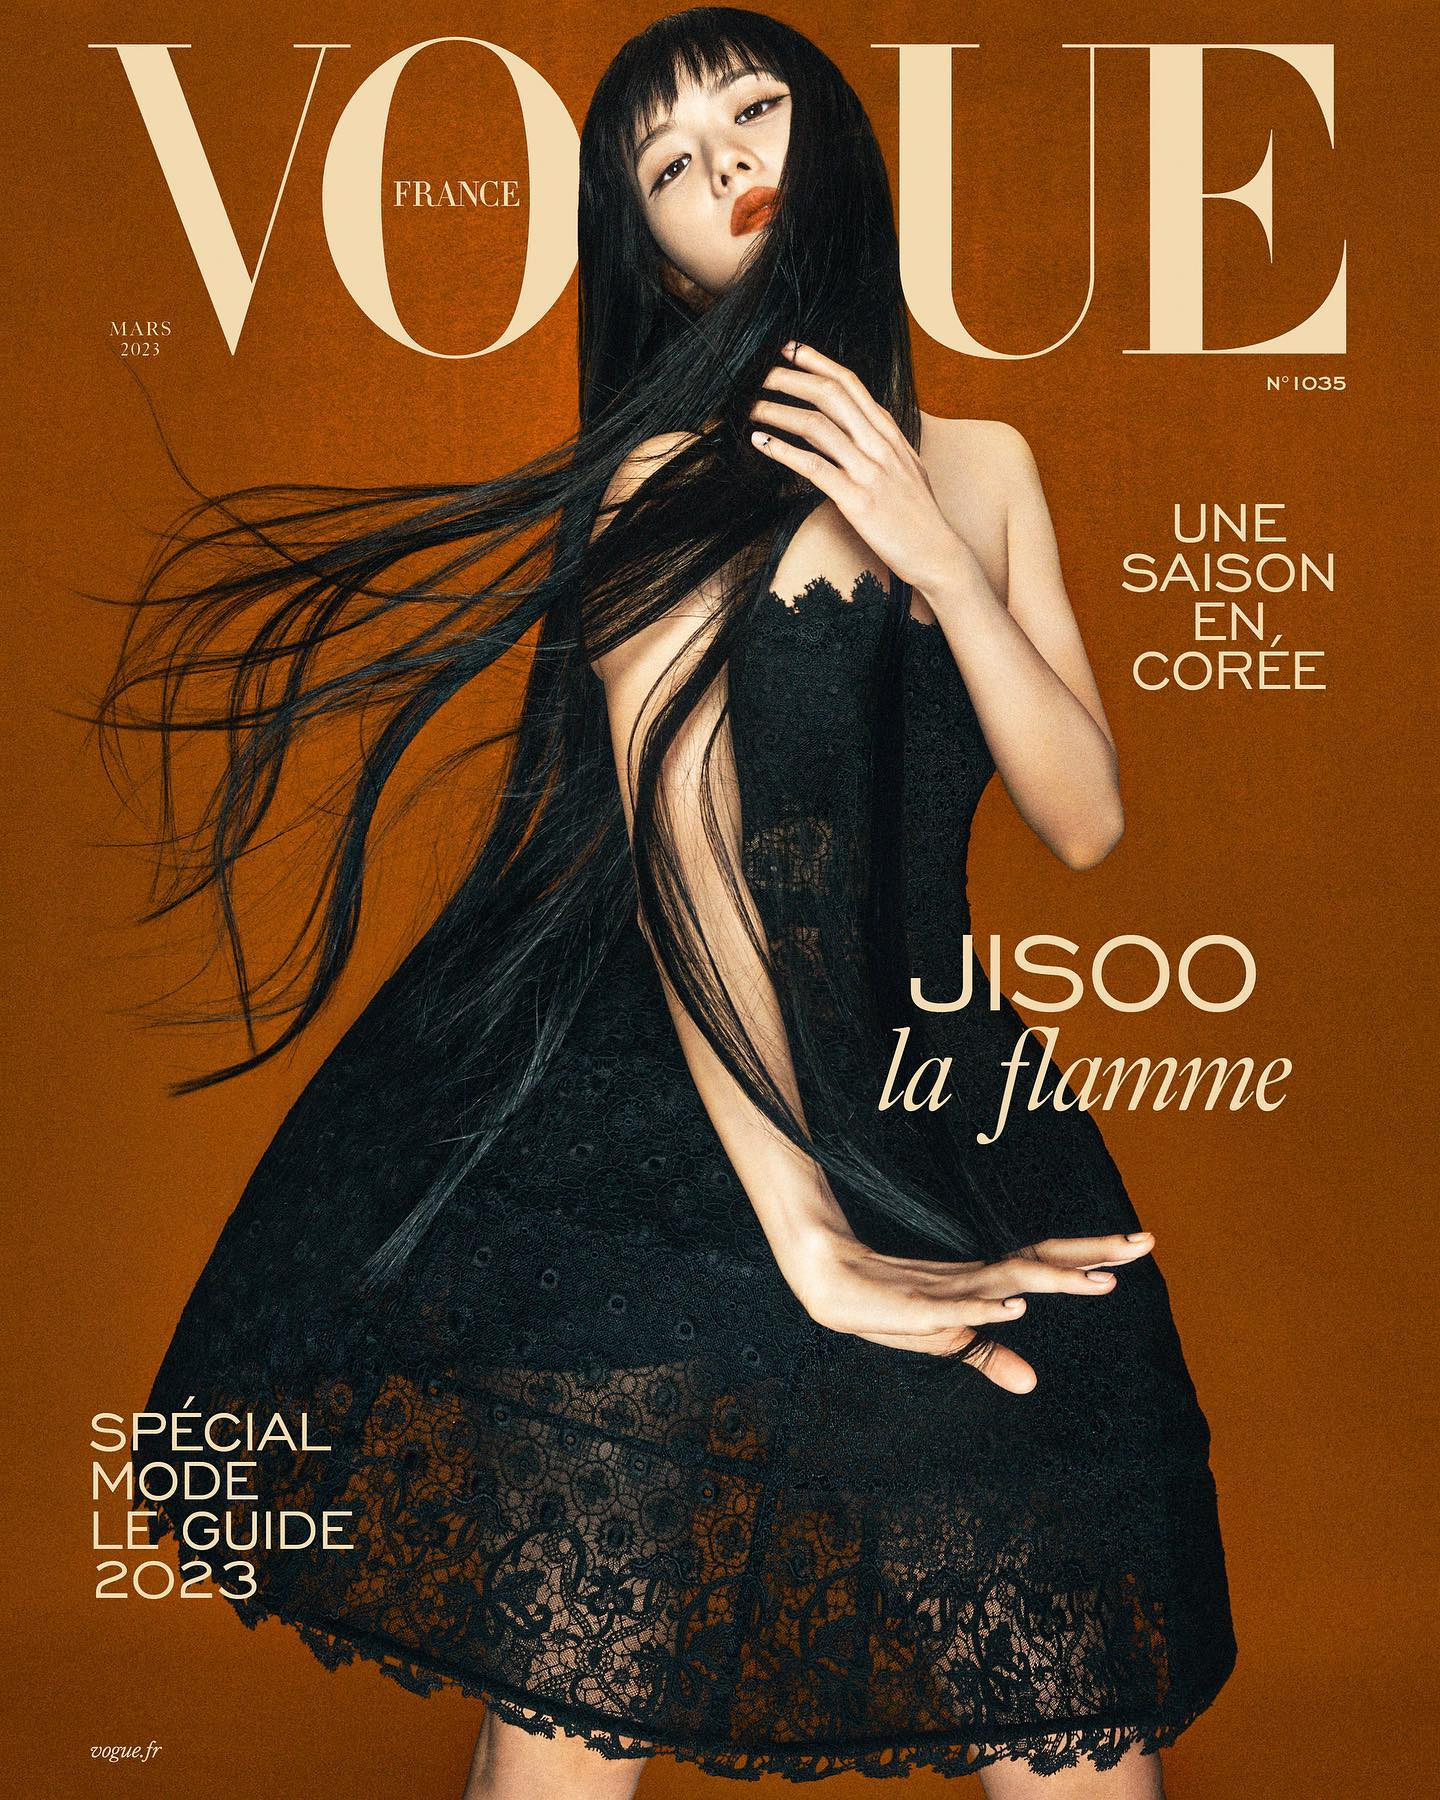 Memesona, Jisoo Blackpink Jadi Idol K-Pop Pertama Hiasi Cover Majalah Vogue Prancis